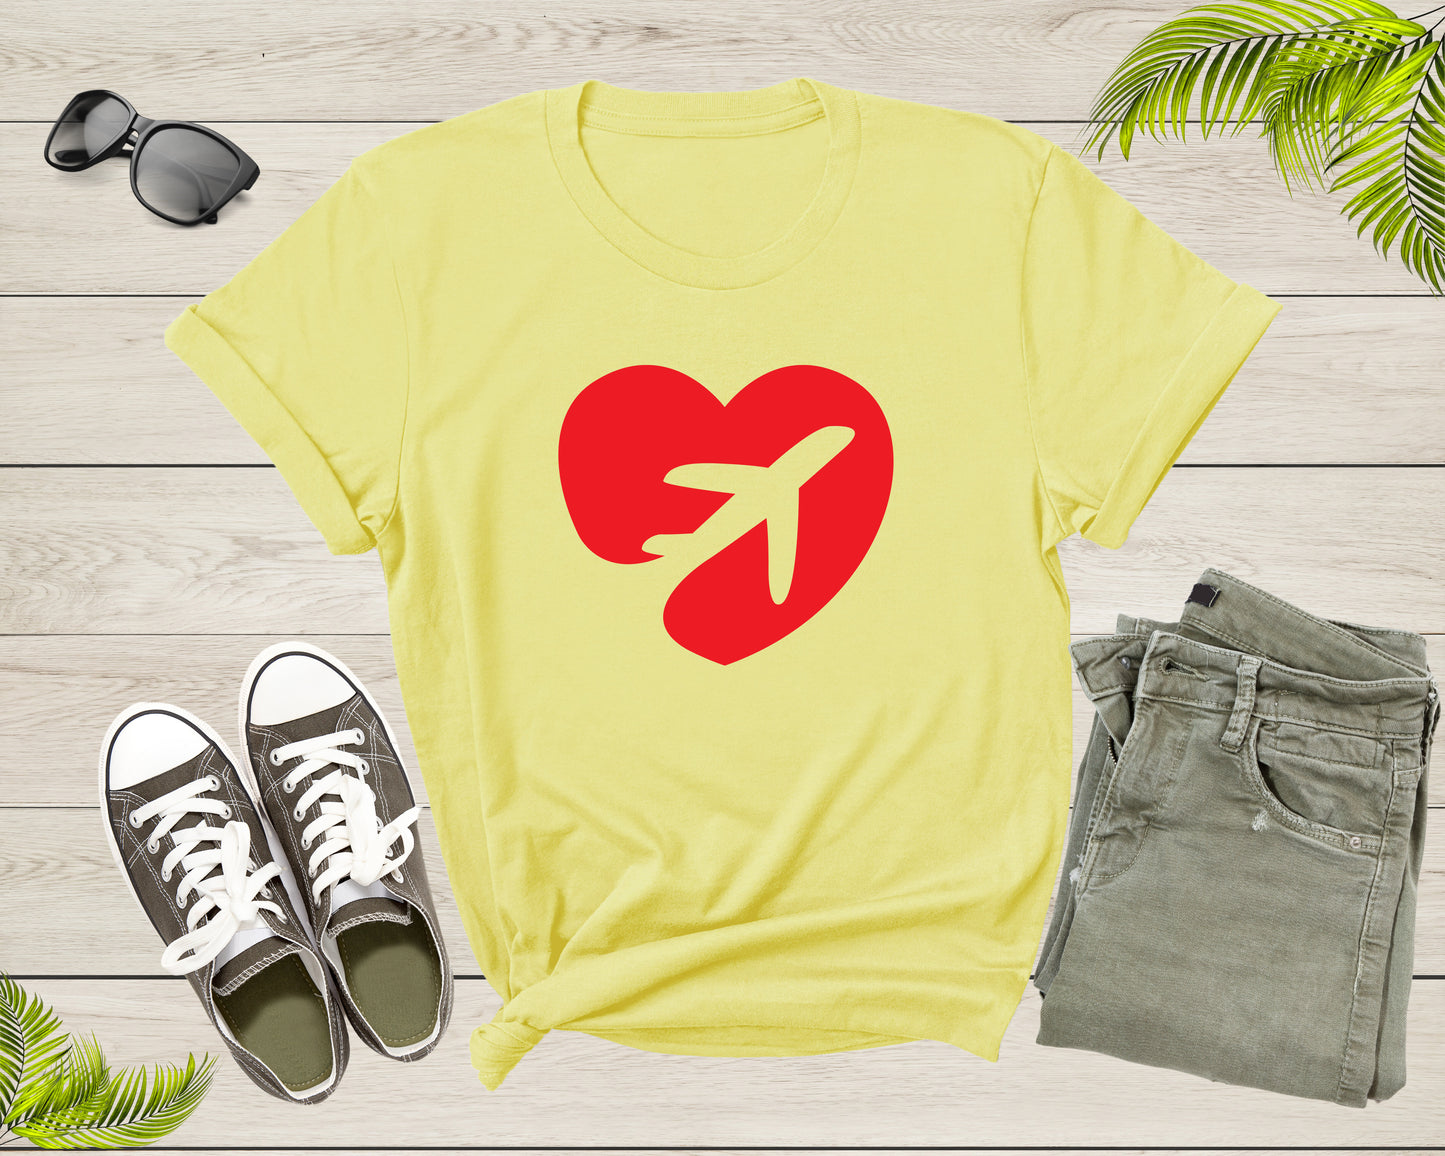 Flying Plane Airplane Aircraft Airliner Jet Love Red Heart T-Shirt Plane Lover Gift T Shirt for Men Women Kids Boys Girls Graphic Tshirt